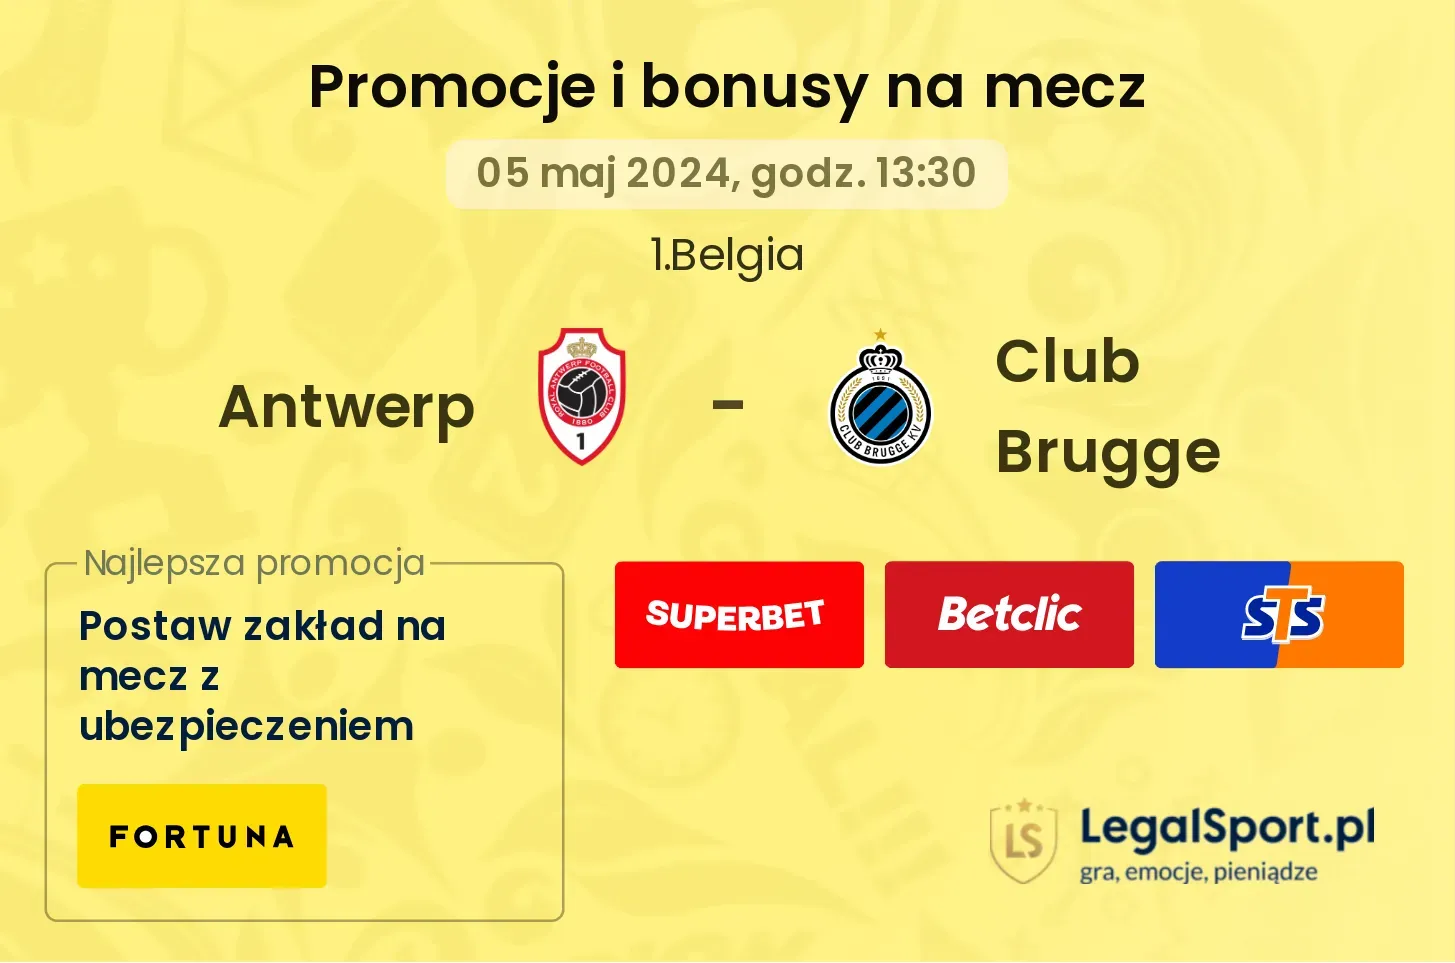 Antwerp - Club Brugge promocje bonusy na mecz